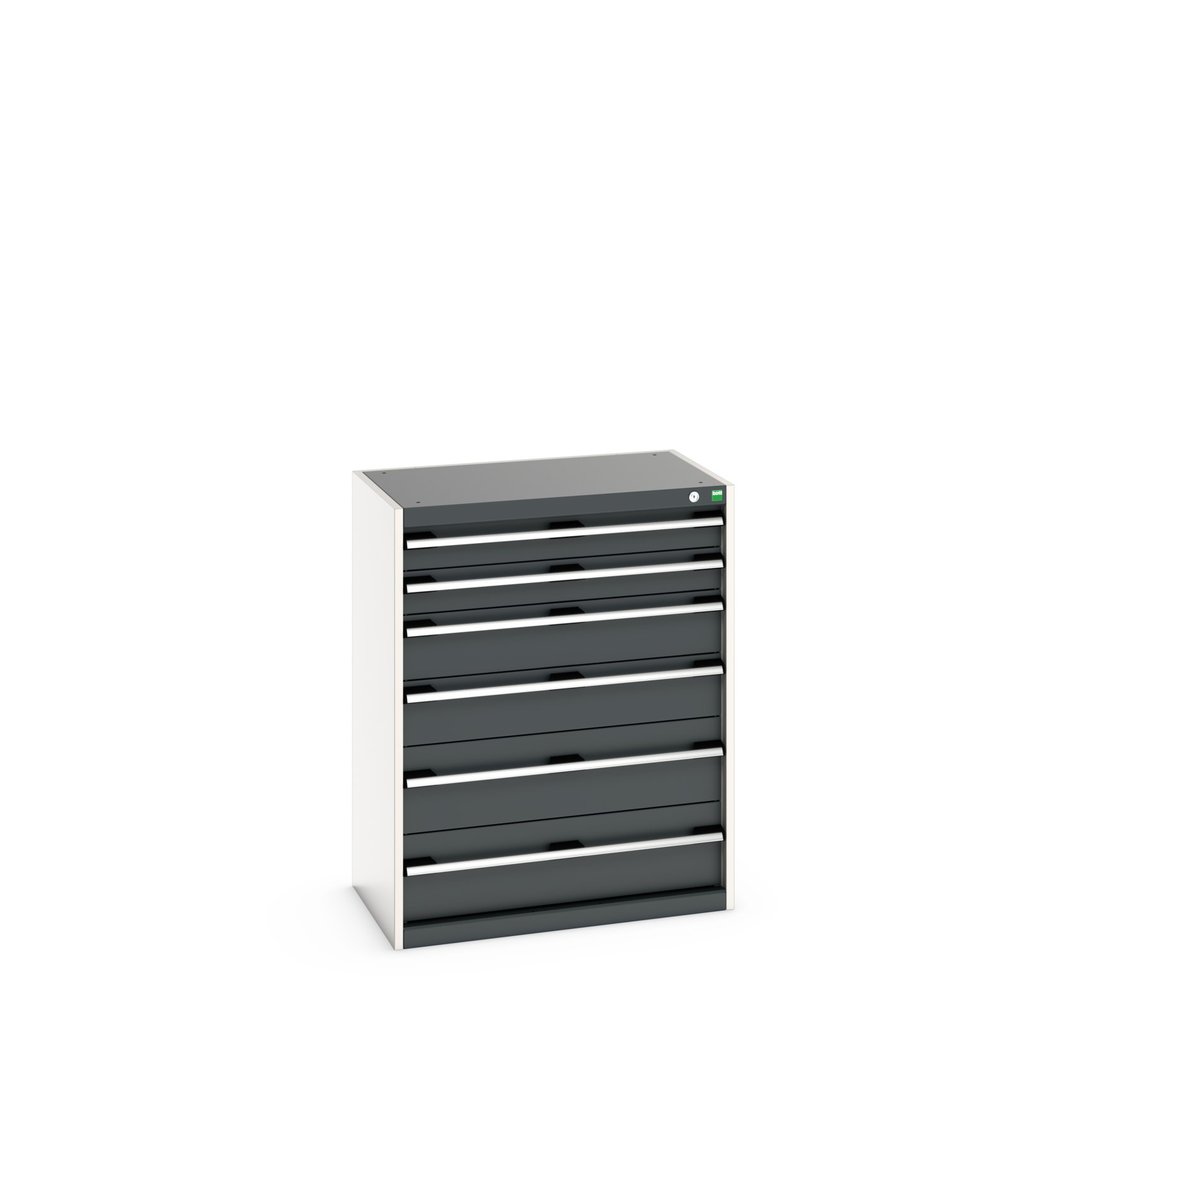 40012035. - cubio drawer cabinet